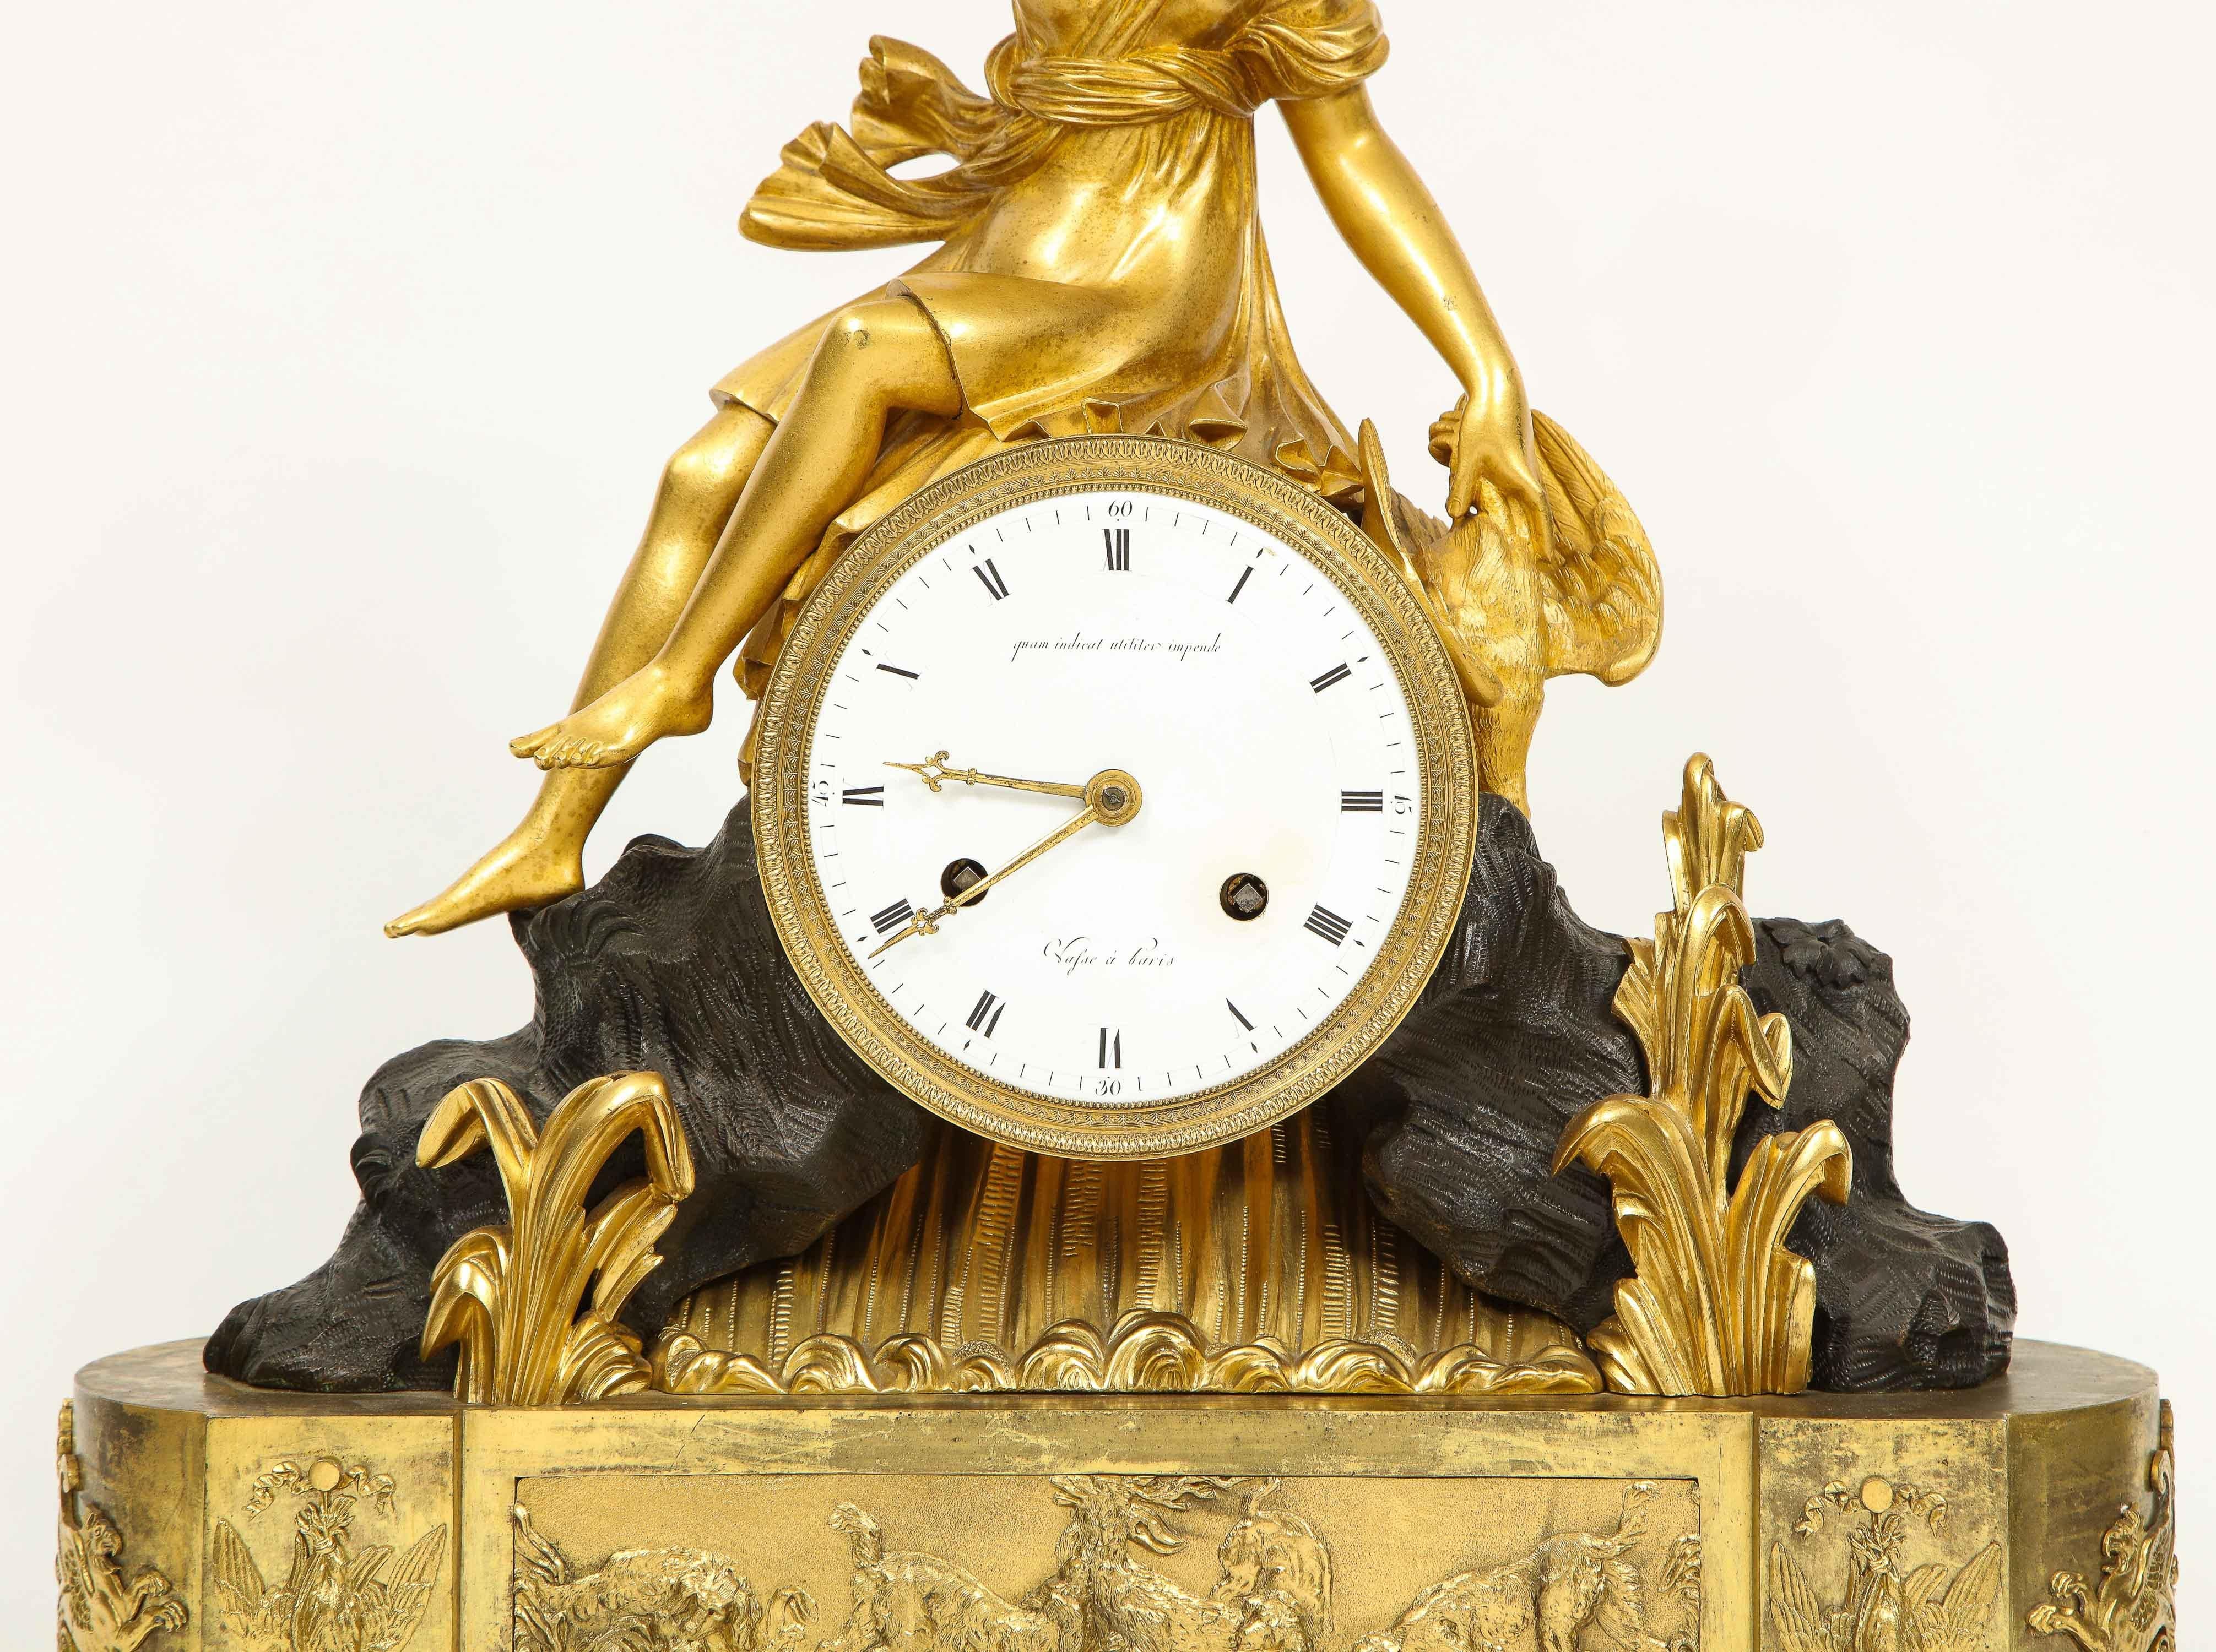 19th Century French Empire Ormolu and Patinated Bronze Clock with Huntress Diana, circa 1805